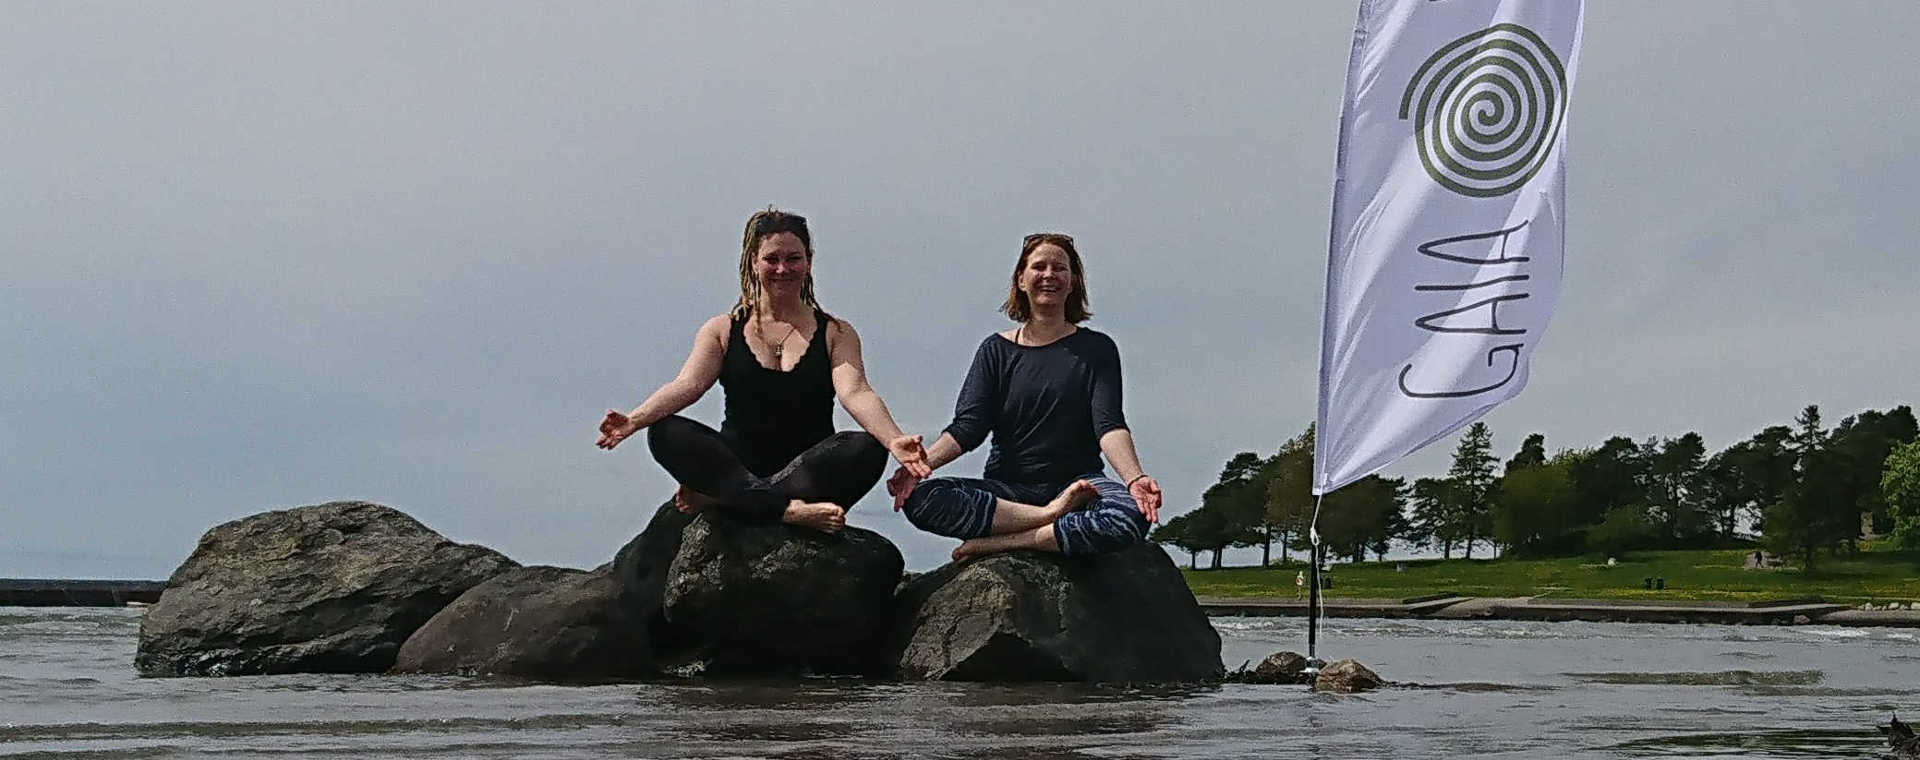 Gratis yoga på stranden med Gaia Yoga Tønsberg